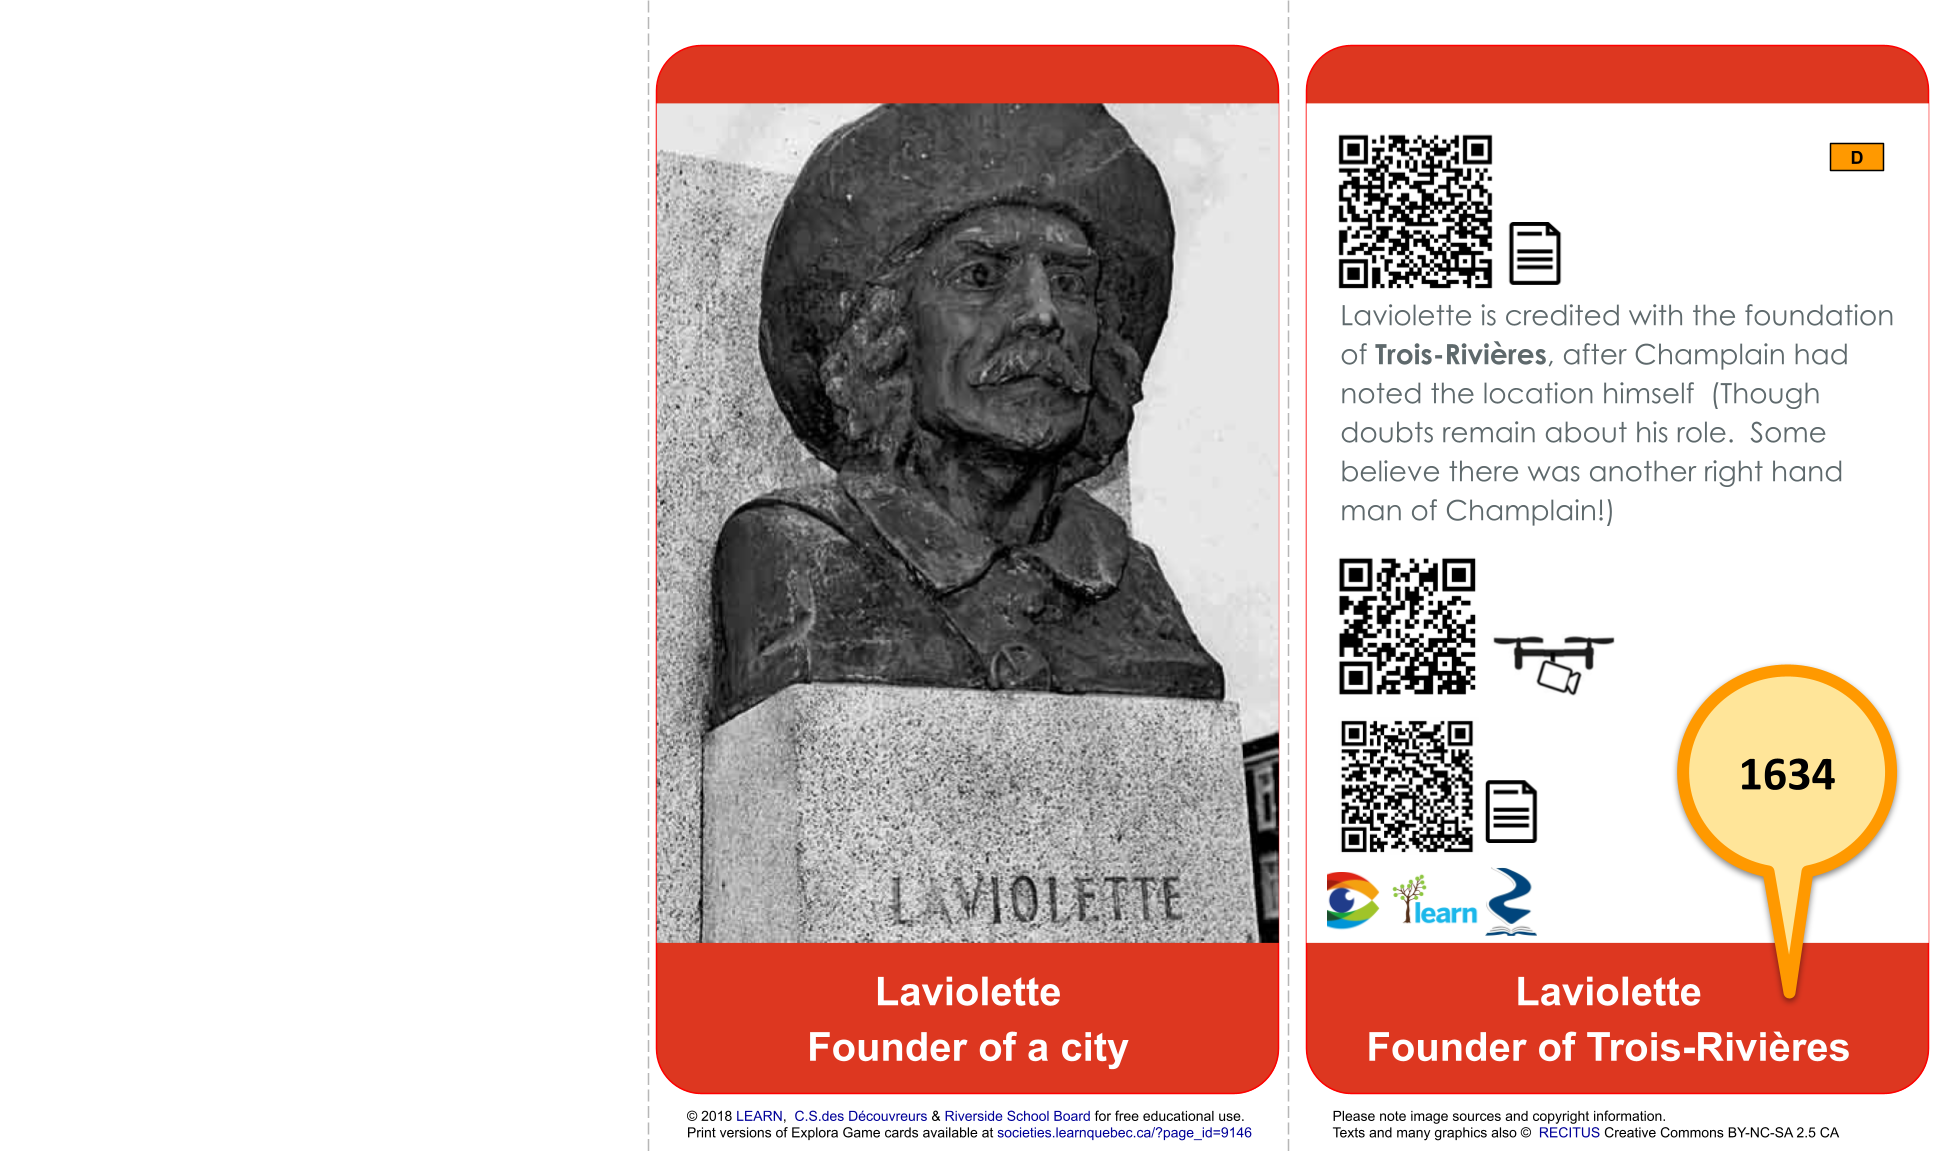 1634 Laviolette Founder of a city